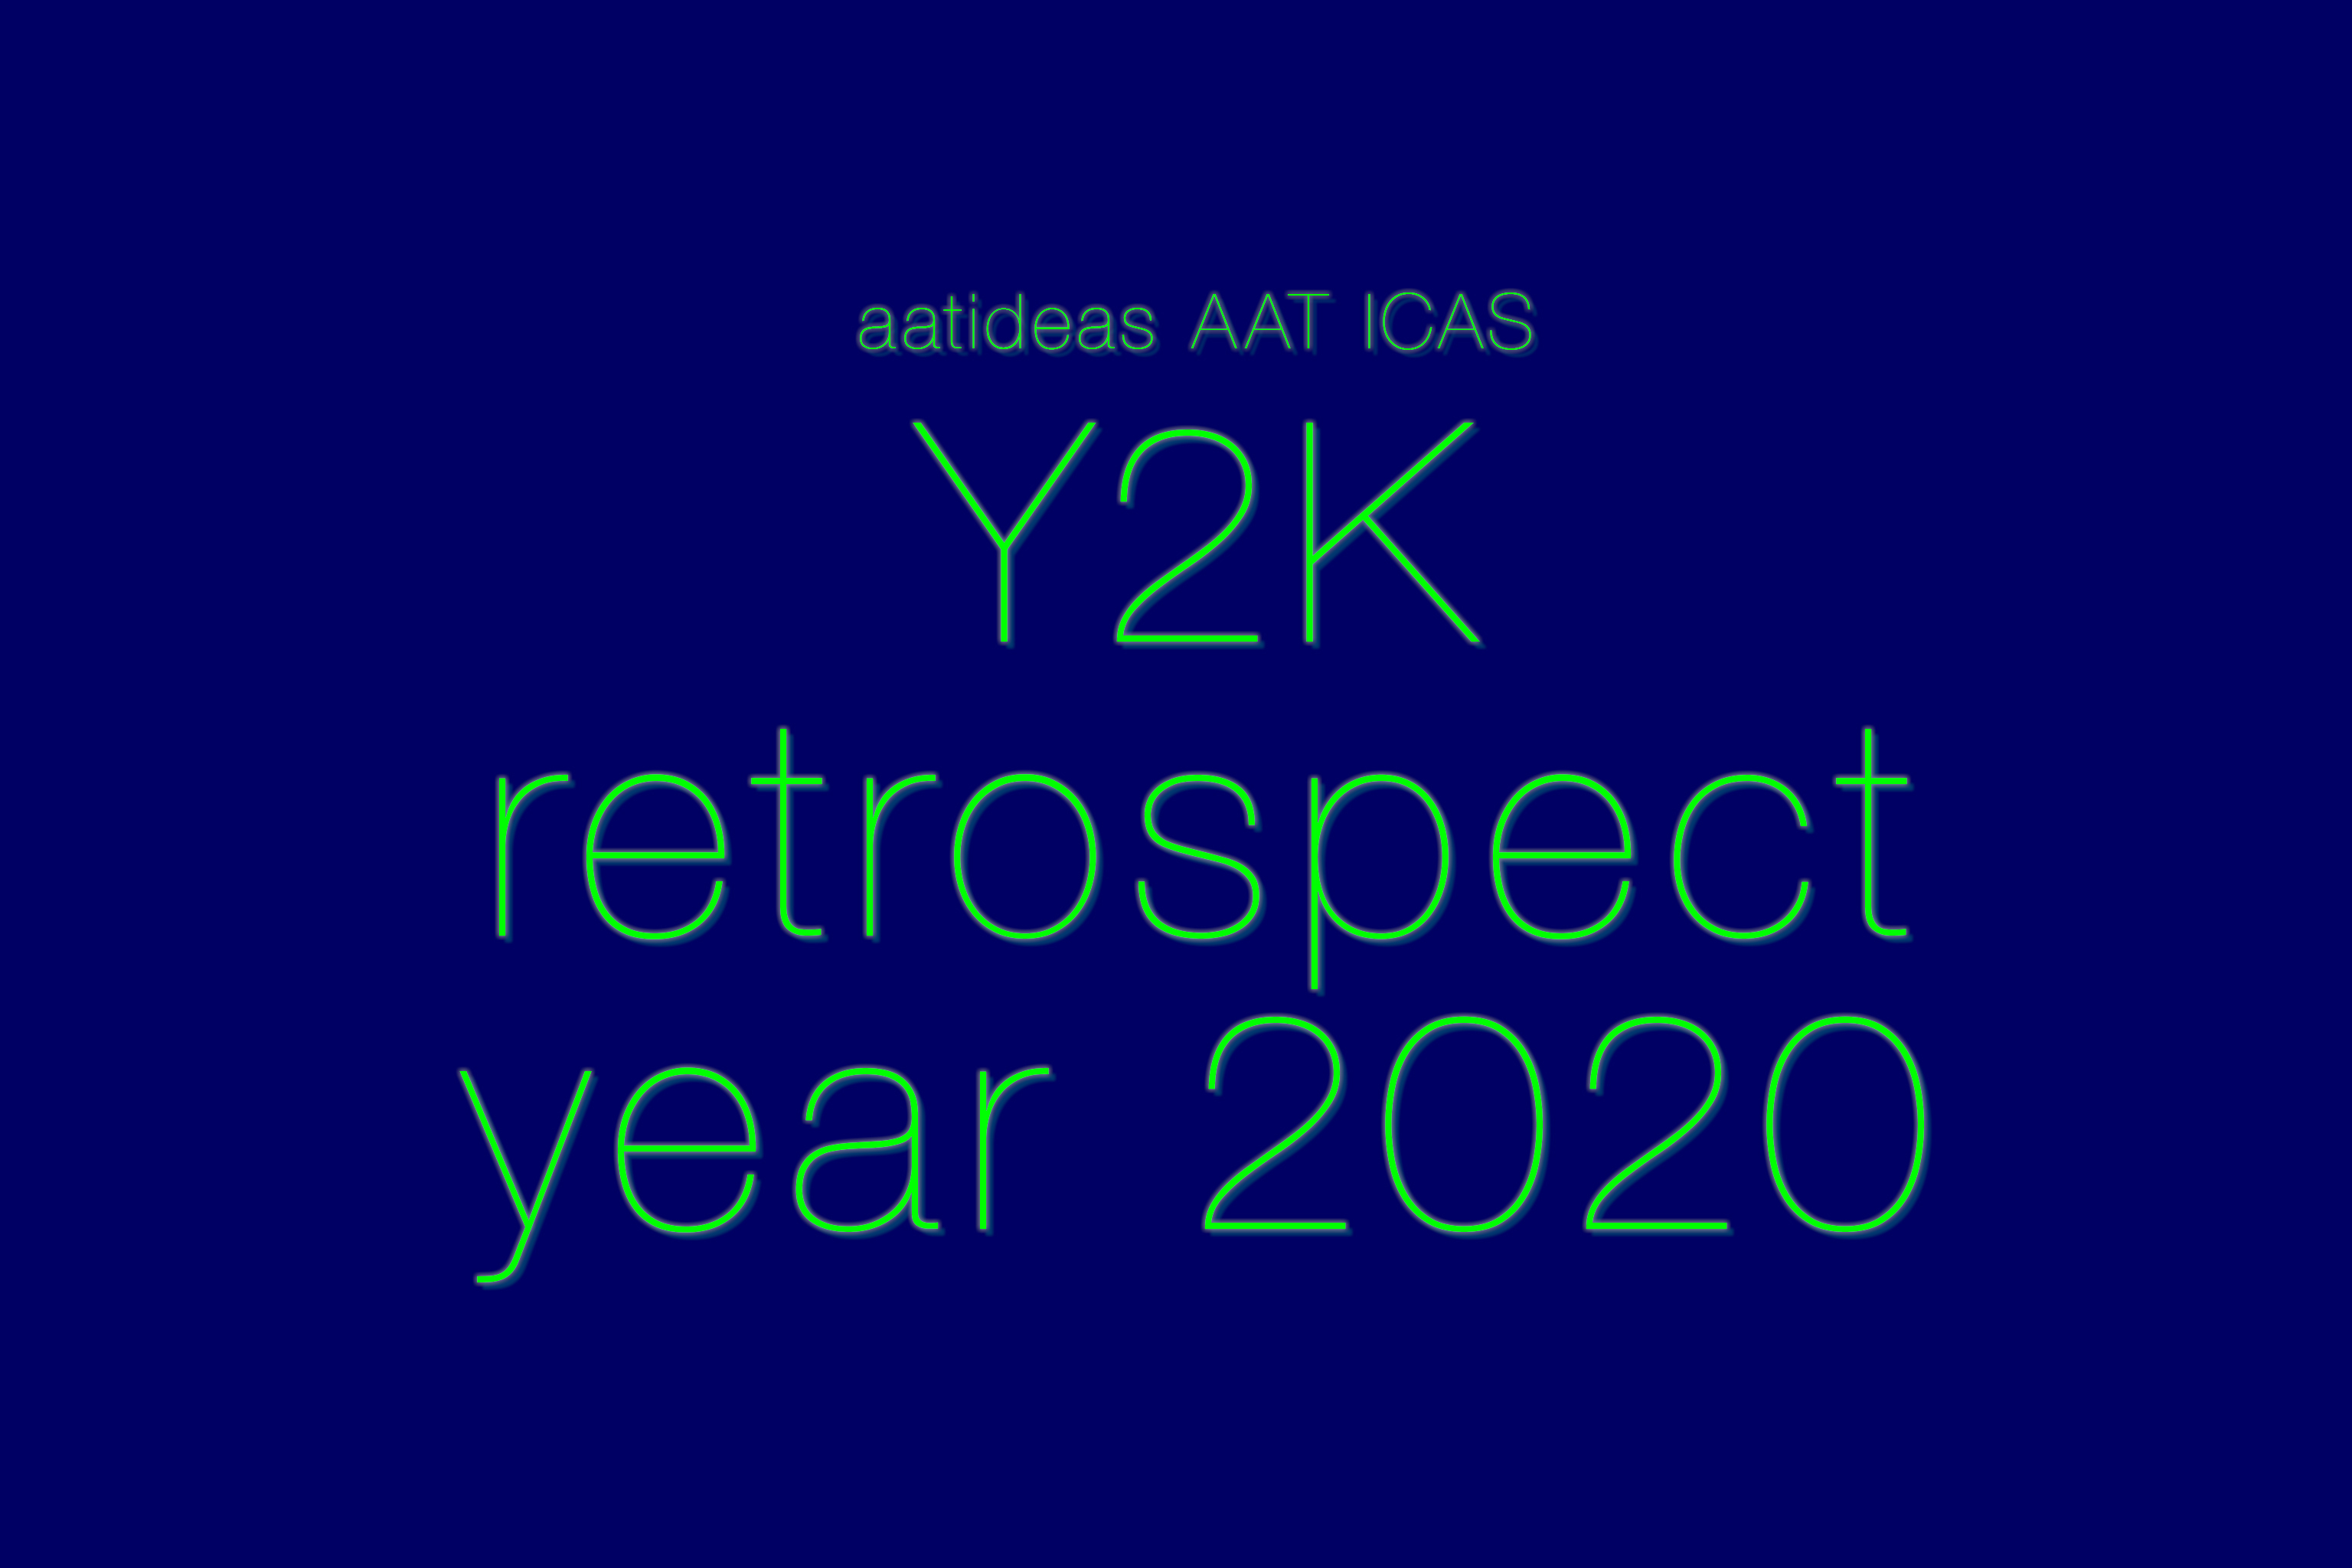 AAT ICAS Y2K retrospect of year 2020